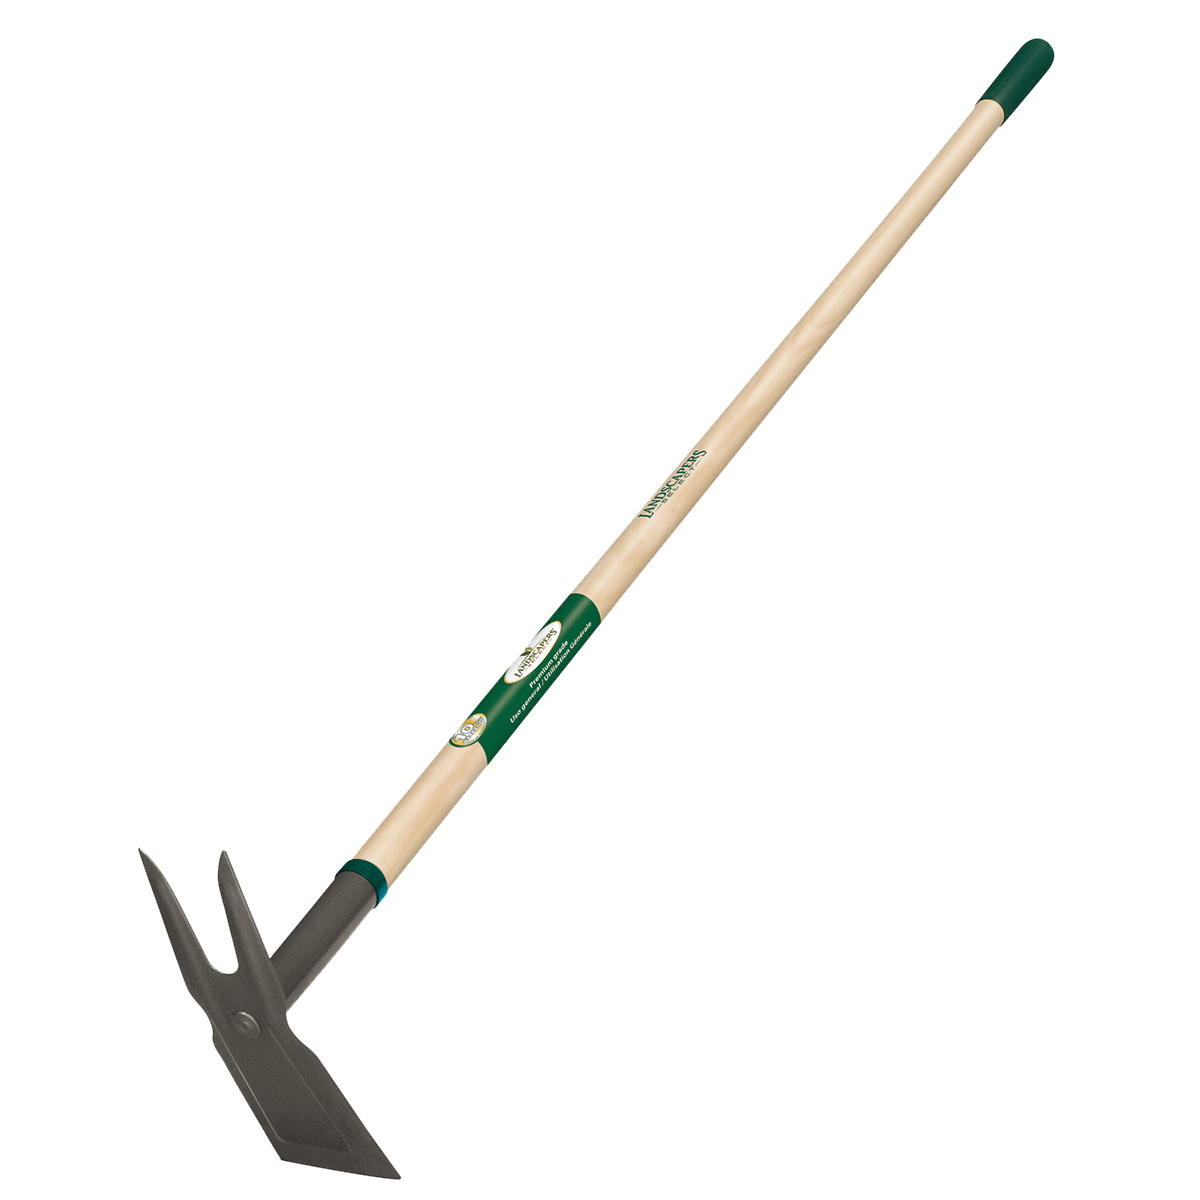 34611 Garden Hoes, 4 in W Blade, Steel Blade, Stamped Blade, Wood Handle, 54-3/4 in OAL